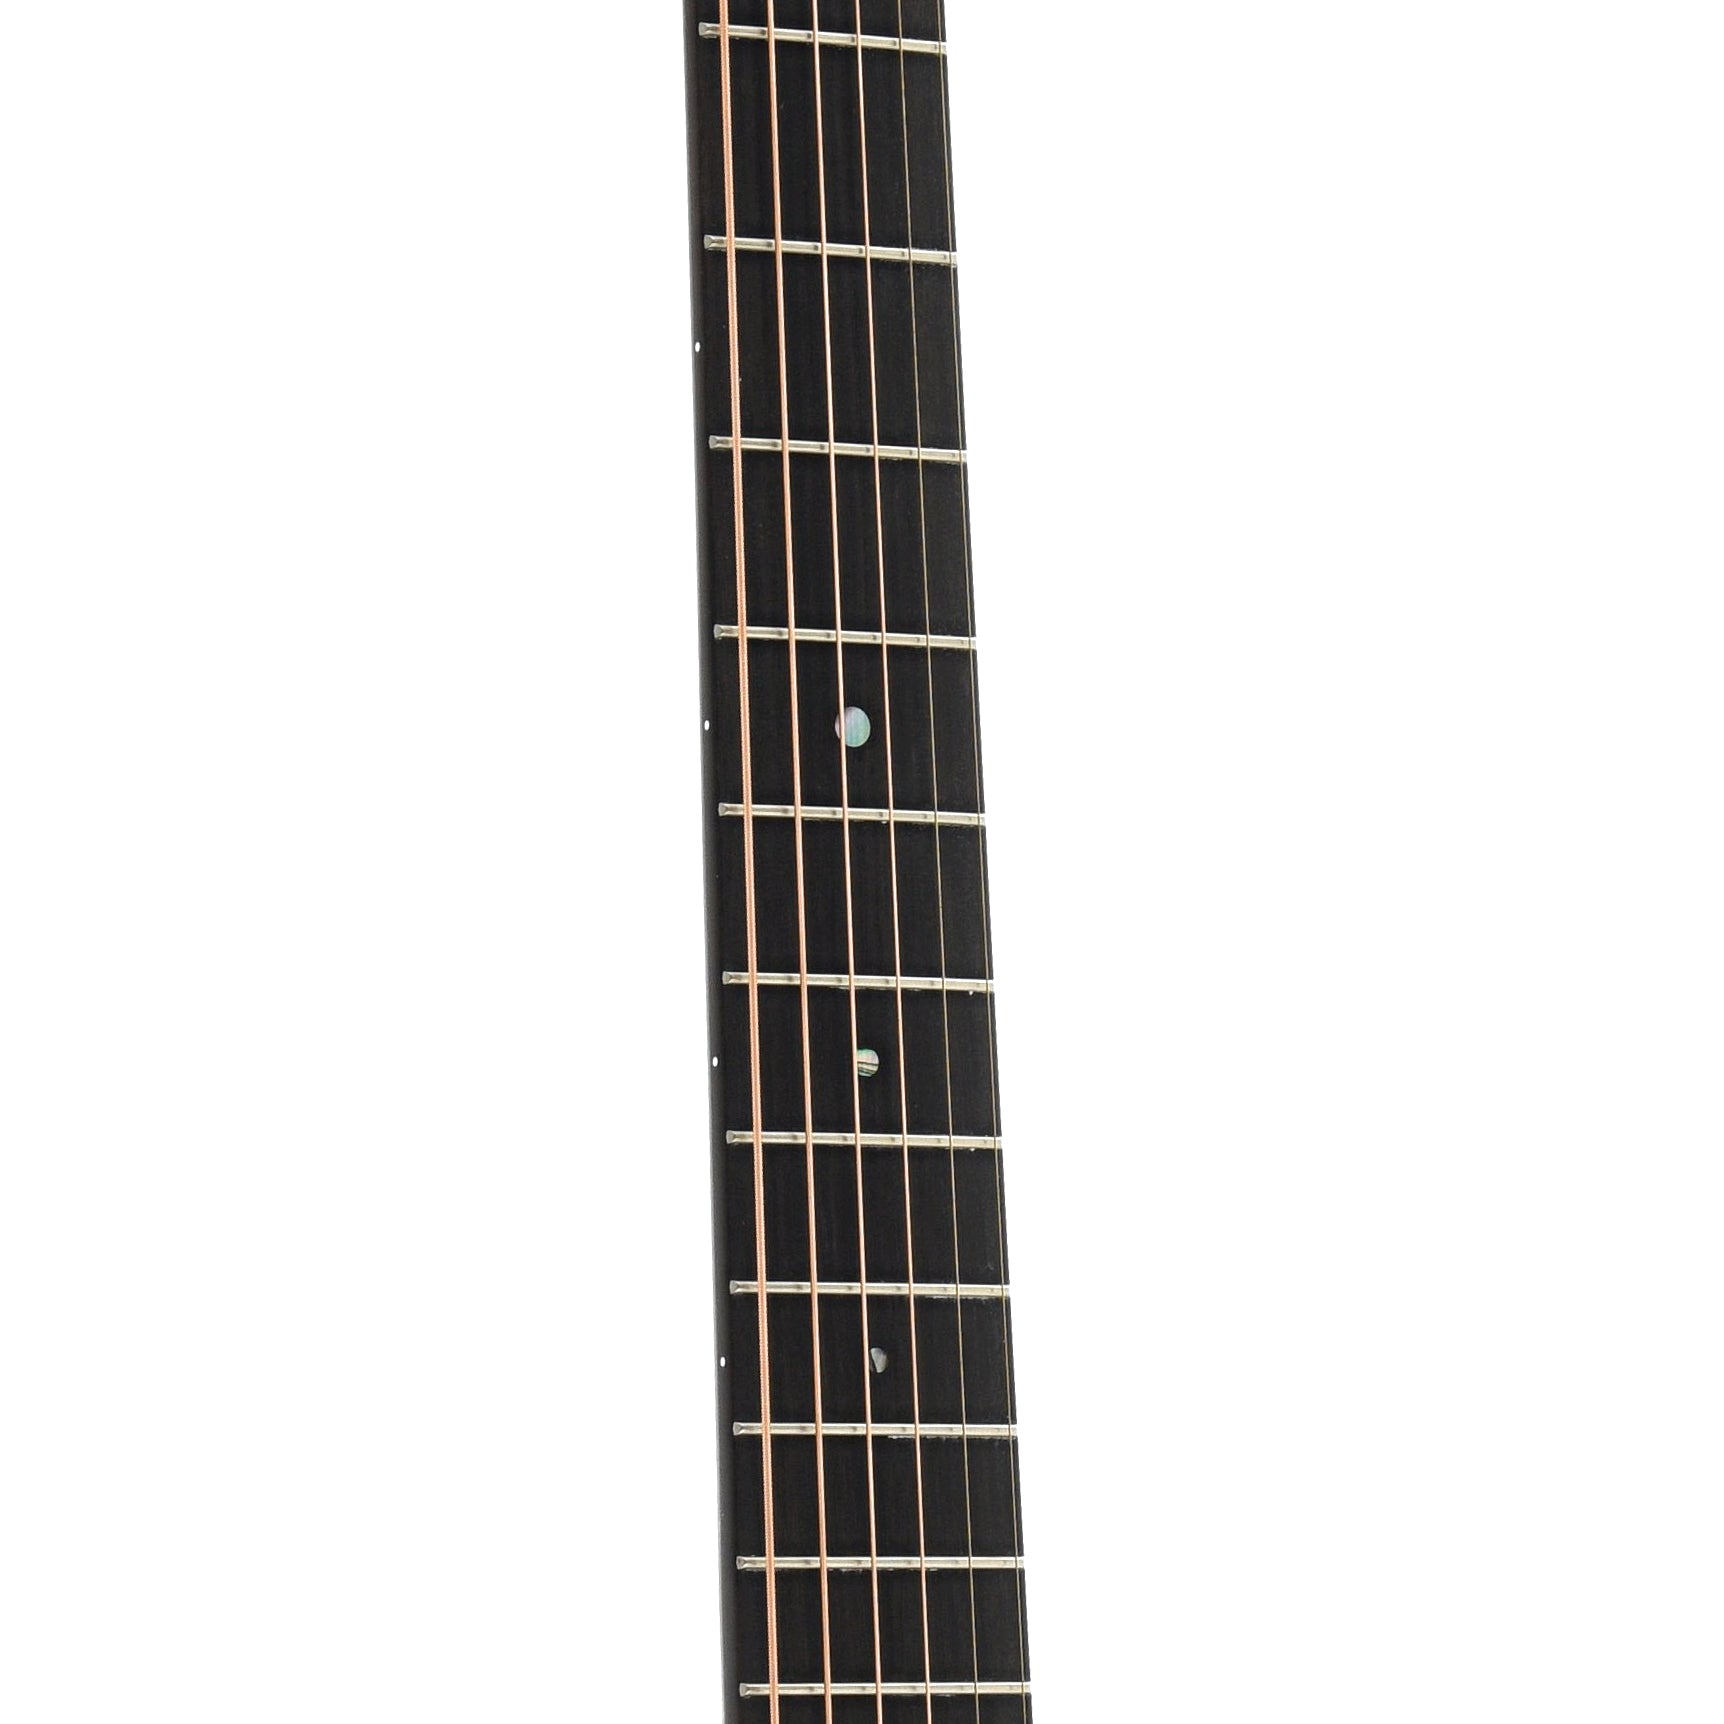 Fretboard of Martin 0-18 Guitar